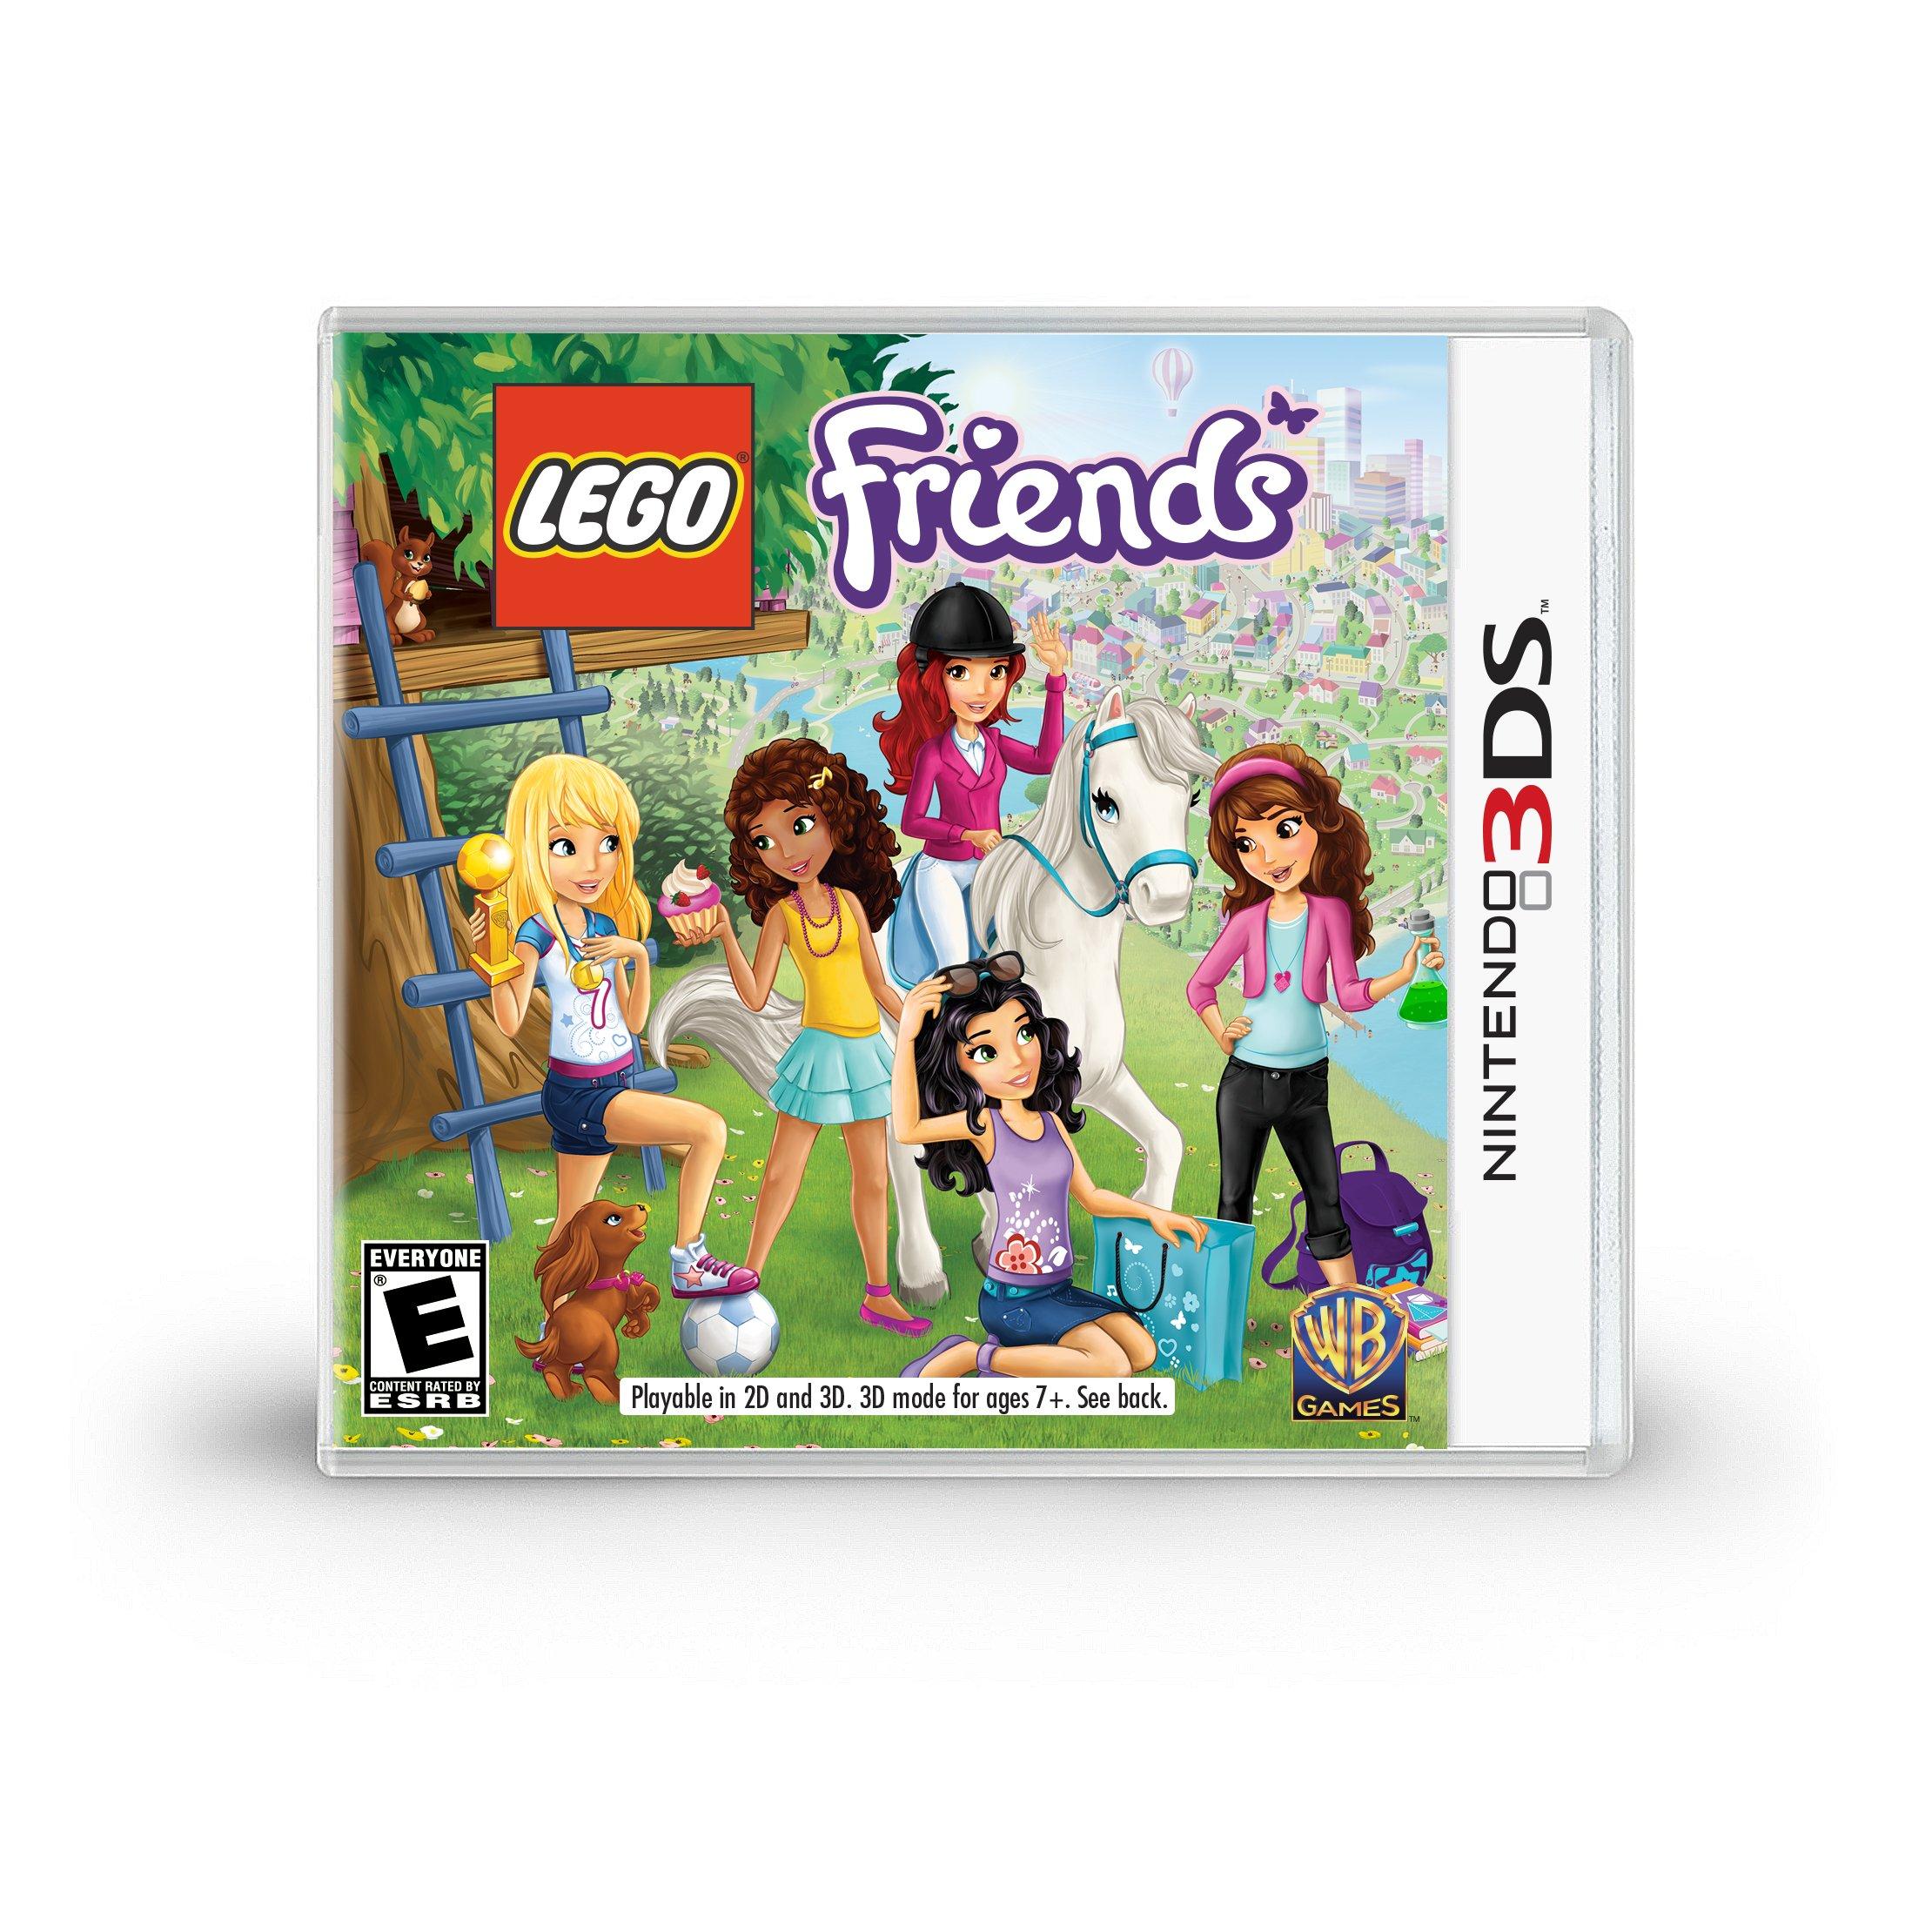 LEGO Friends - Nintendo 3DS, Nintendo 3DS